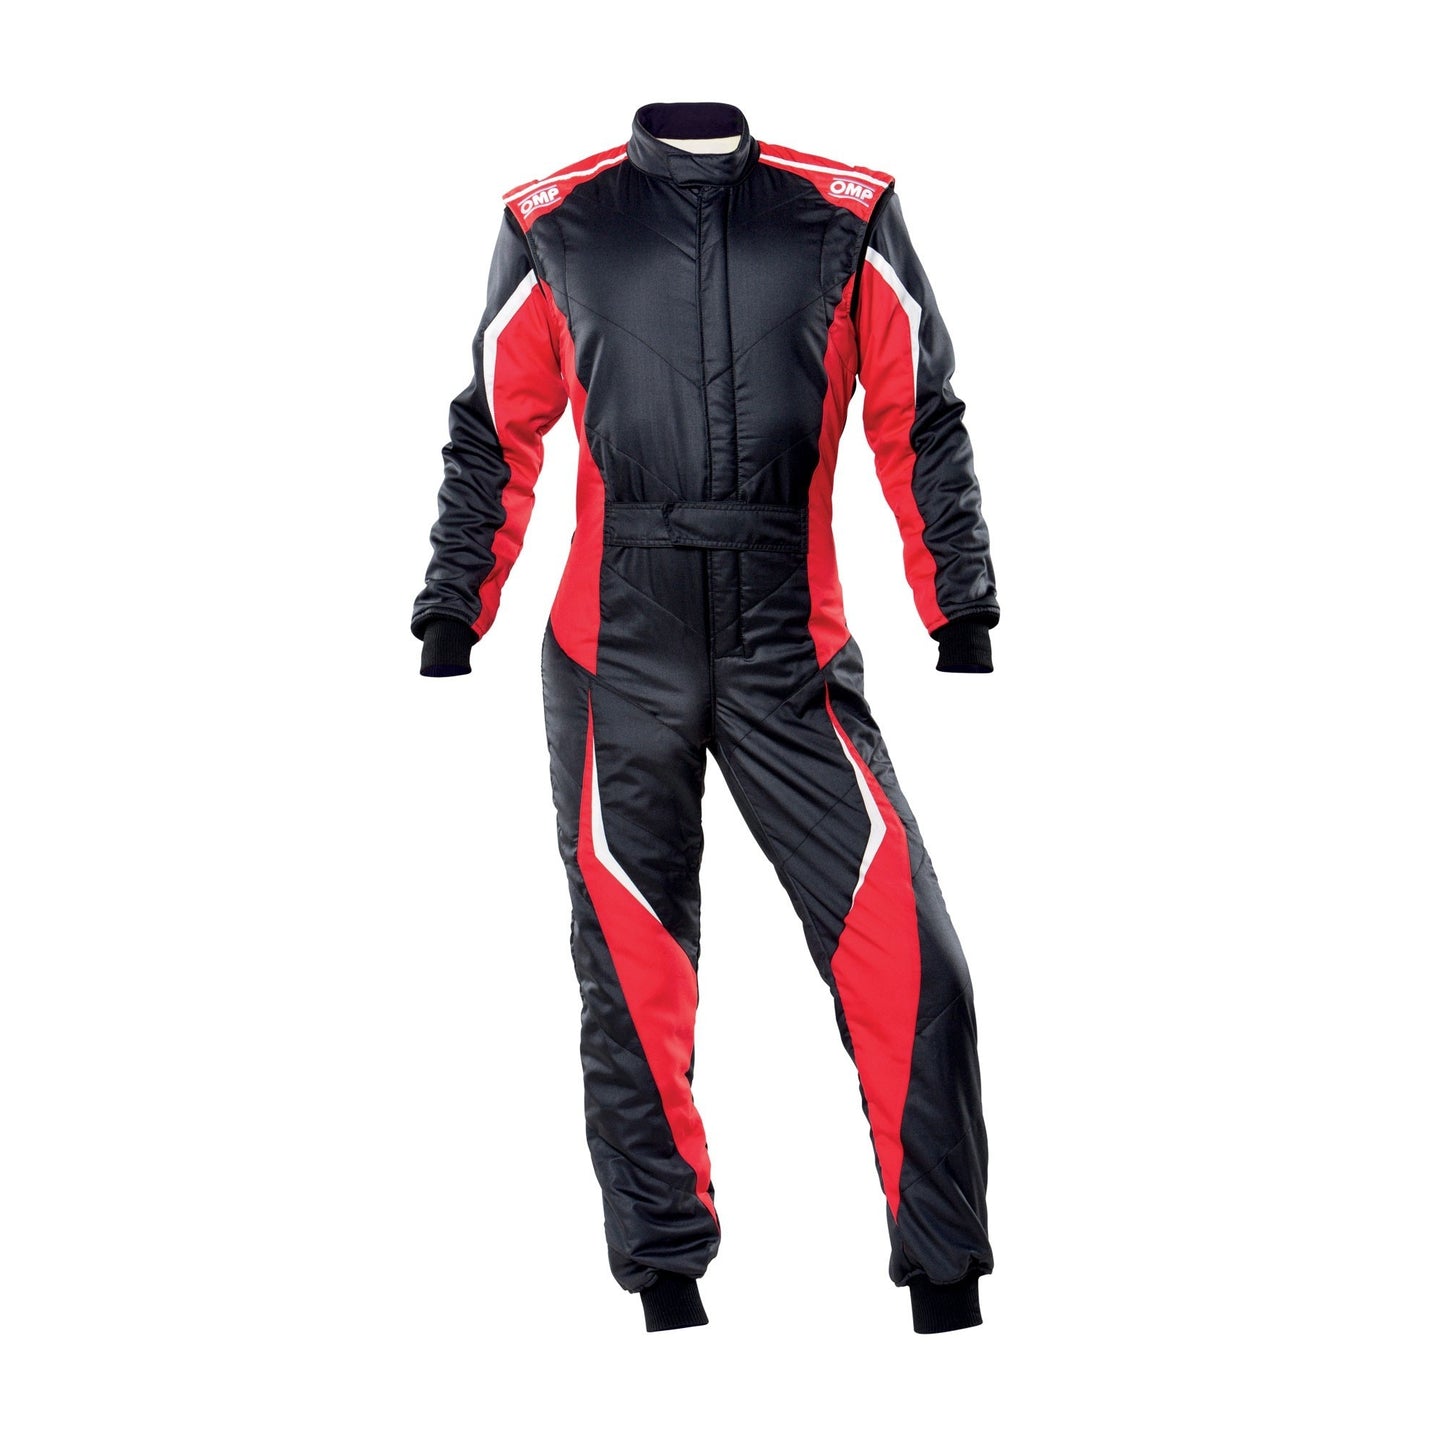 OMP Racing Tecnica Evo 2021 Racing Suit